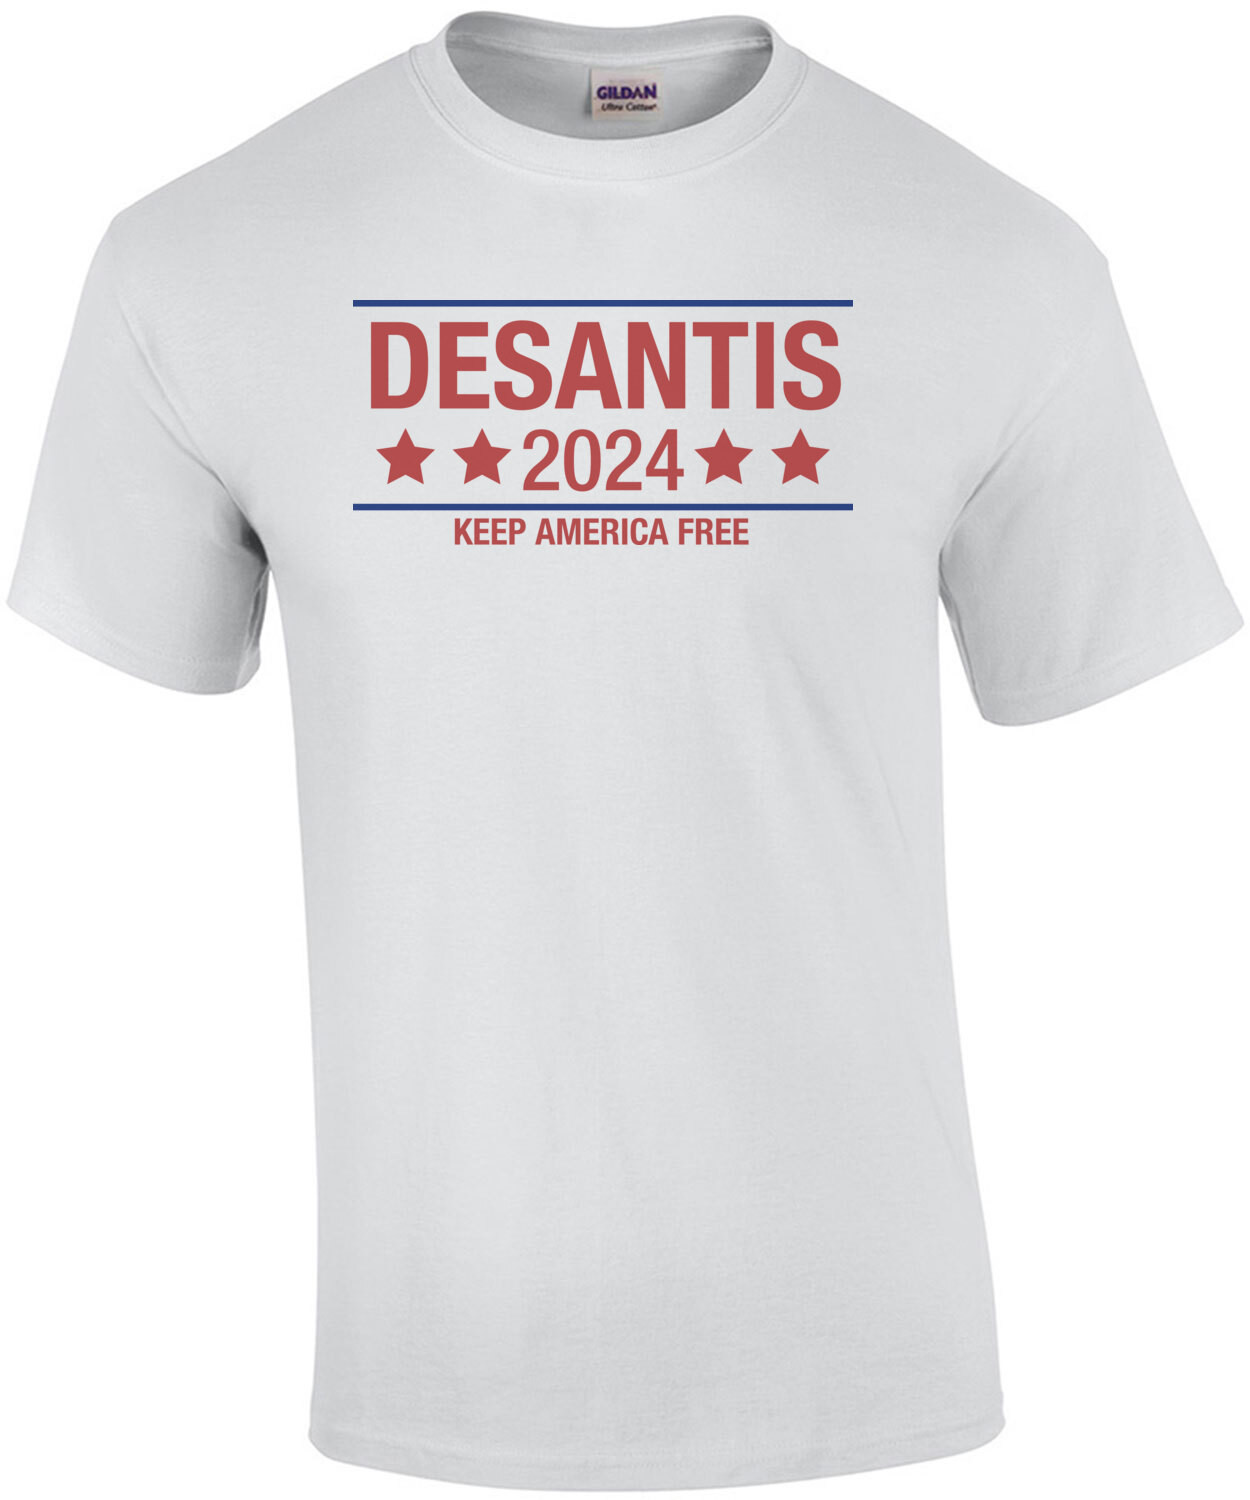 Desantis 2024 Keep America Free Shirt